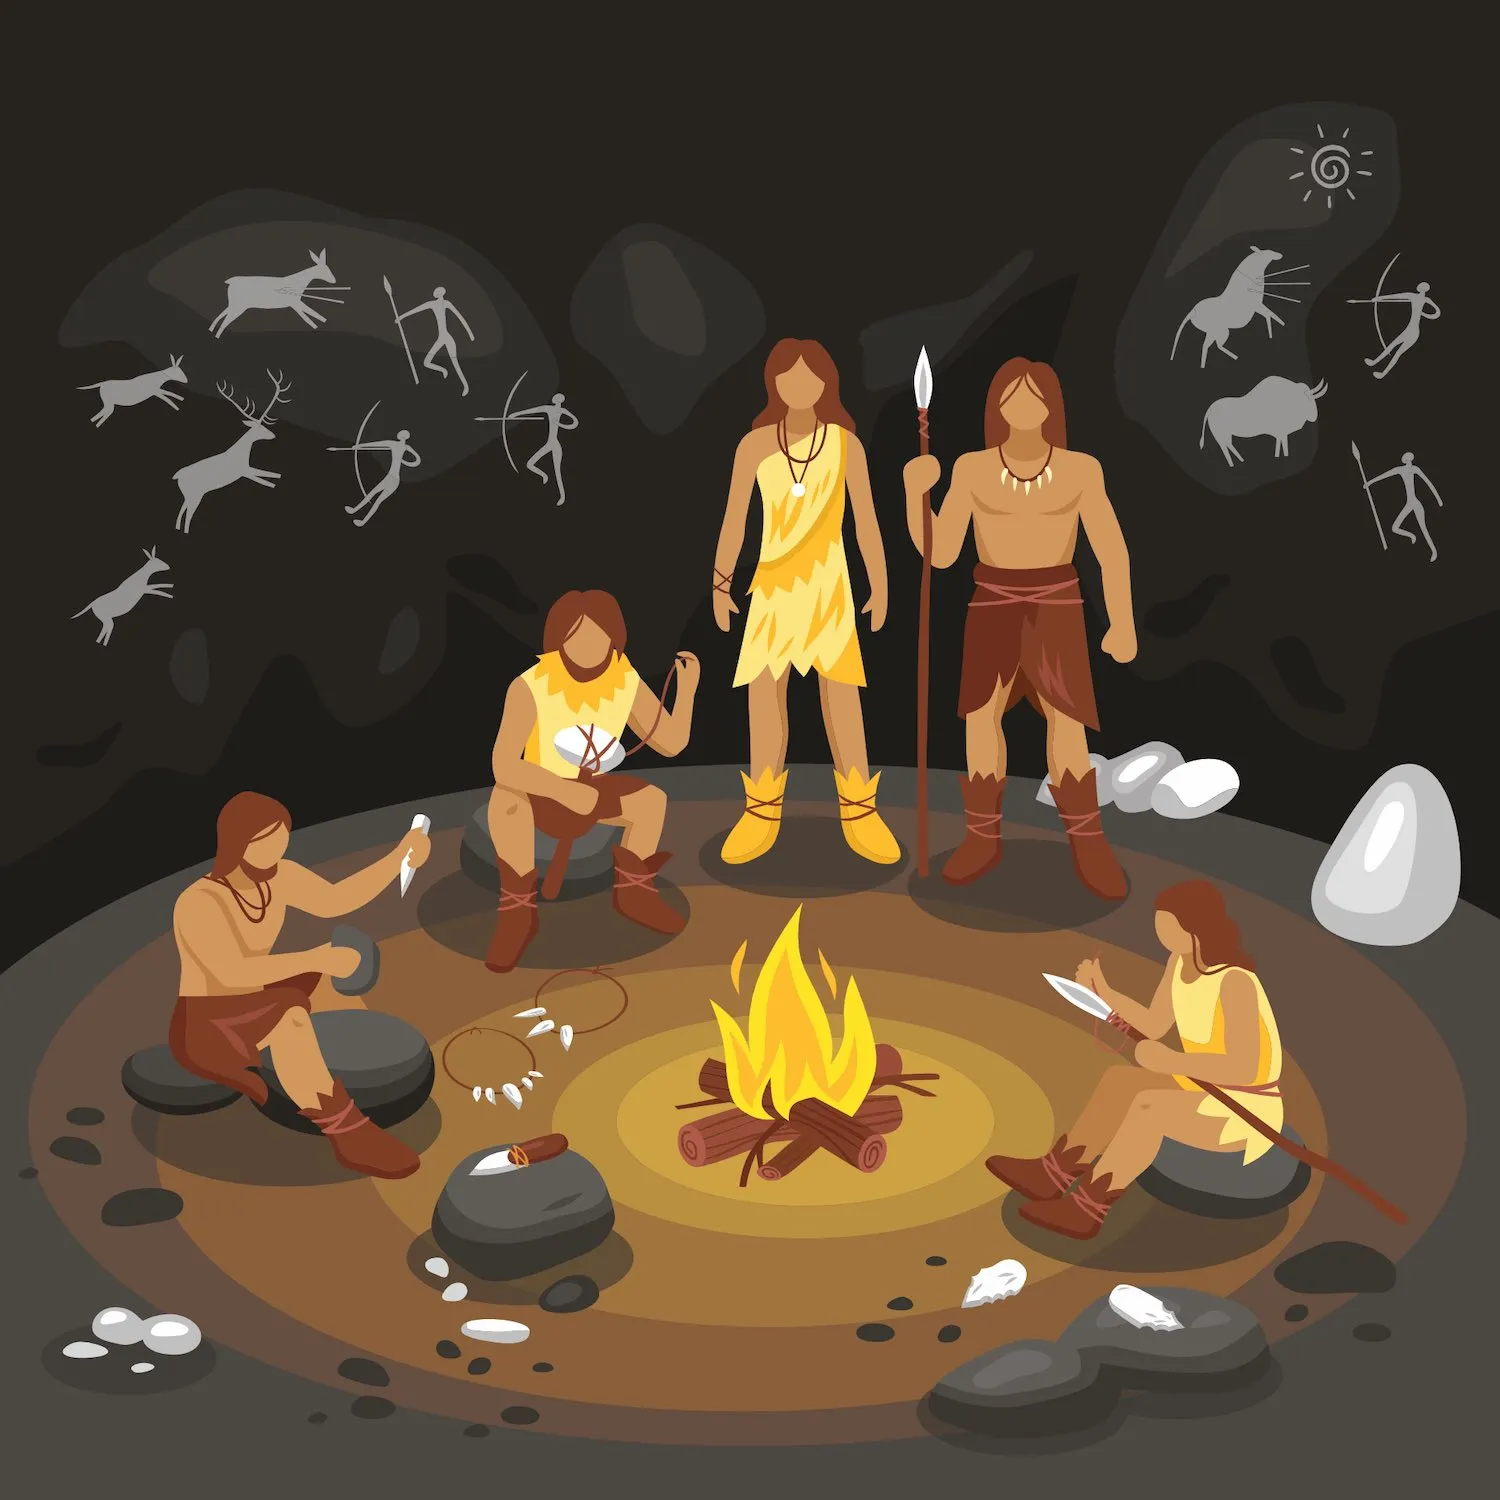 A hunter-gather tribe gathered around a fire